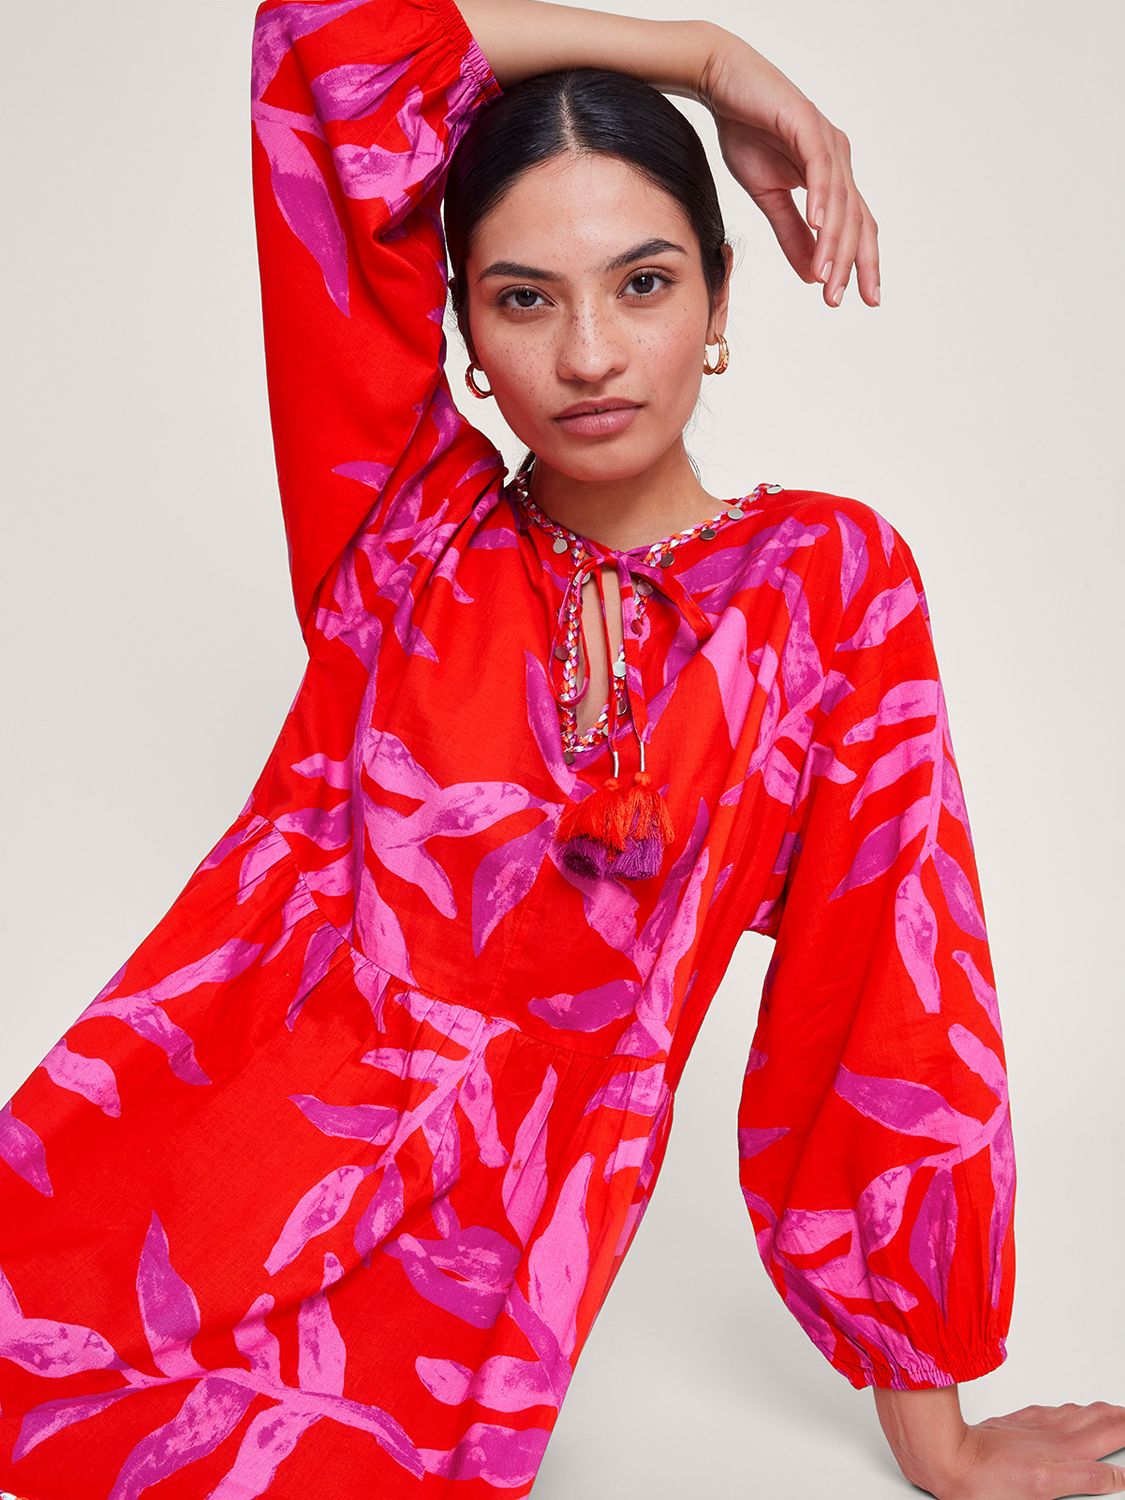 Buy Monsoon Arissa Palm Print Kaftan Dress, Red/Multi Online at johnlewis.com